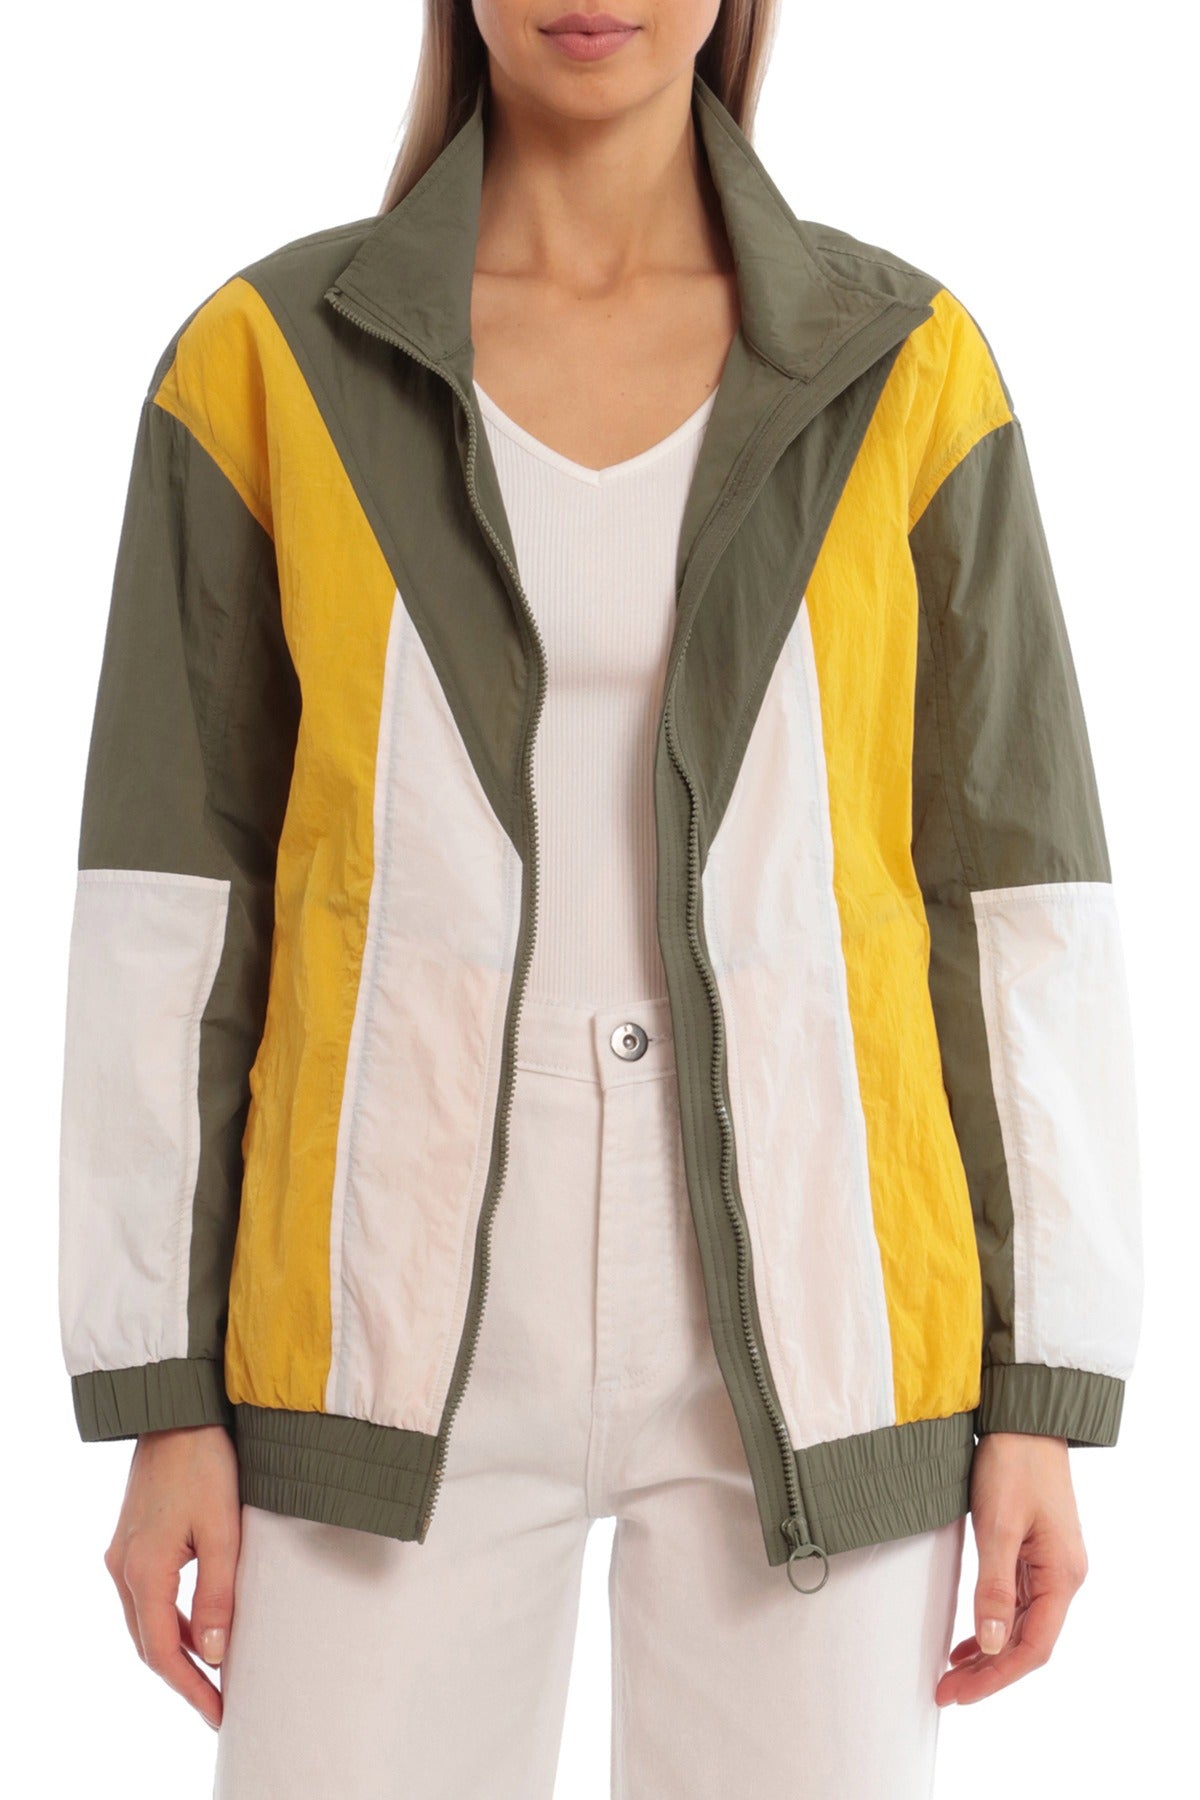 Women's figure flattering colorblock nylon lightweight track jacket outerwear olive green yellow white 